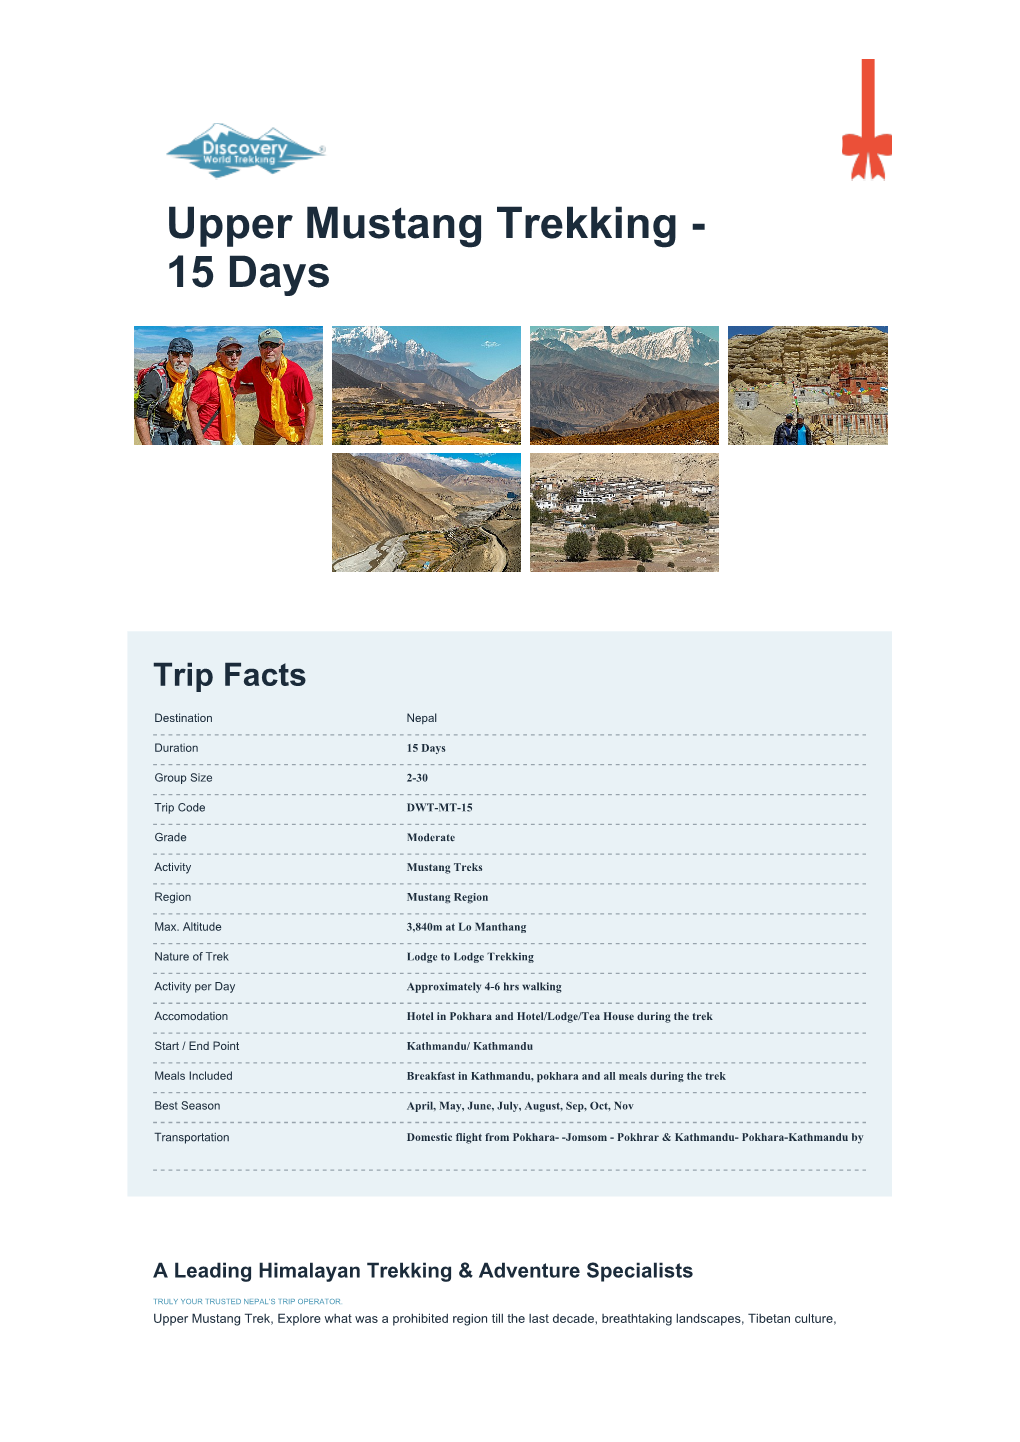 Upper Mustang Trekking - 15 Days